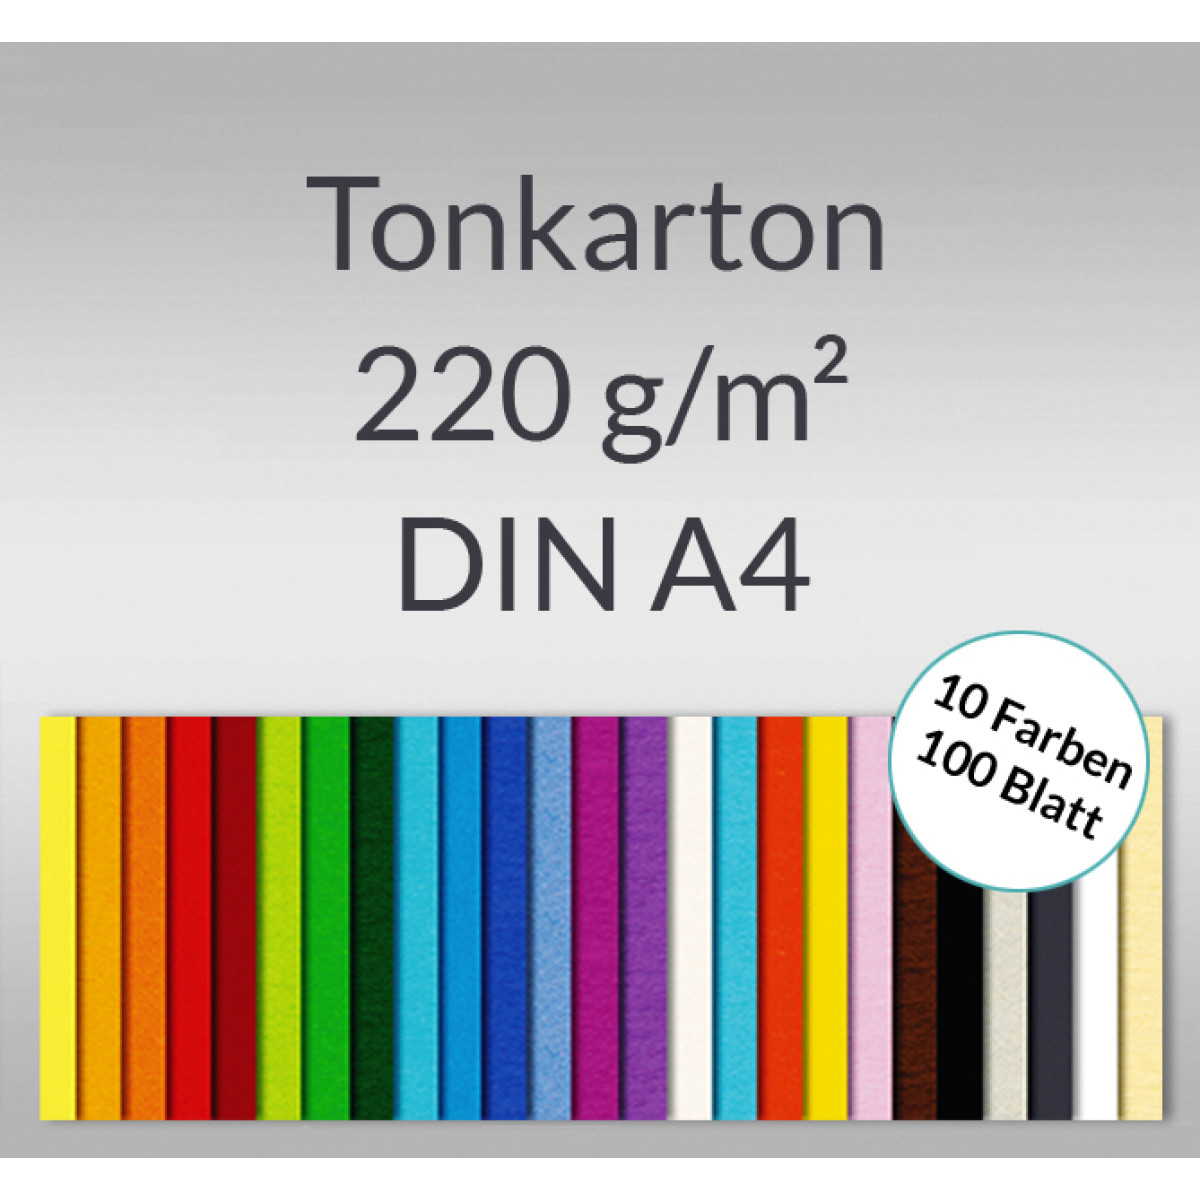 Tonkarton 220 g/qm DIN A4 - 100 Blatt in 10 Farben